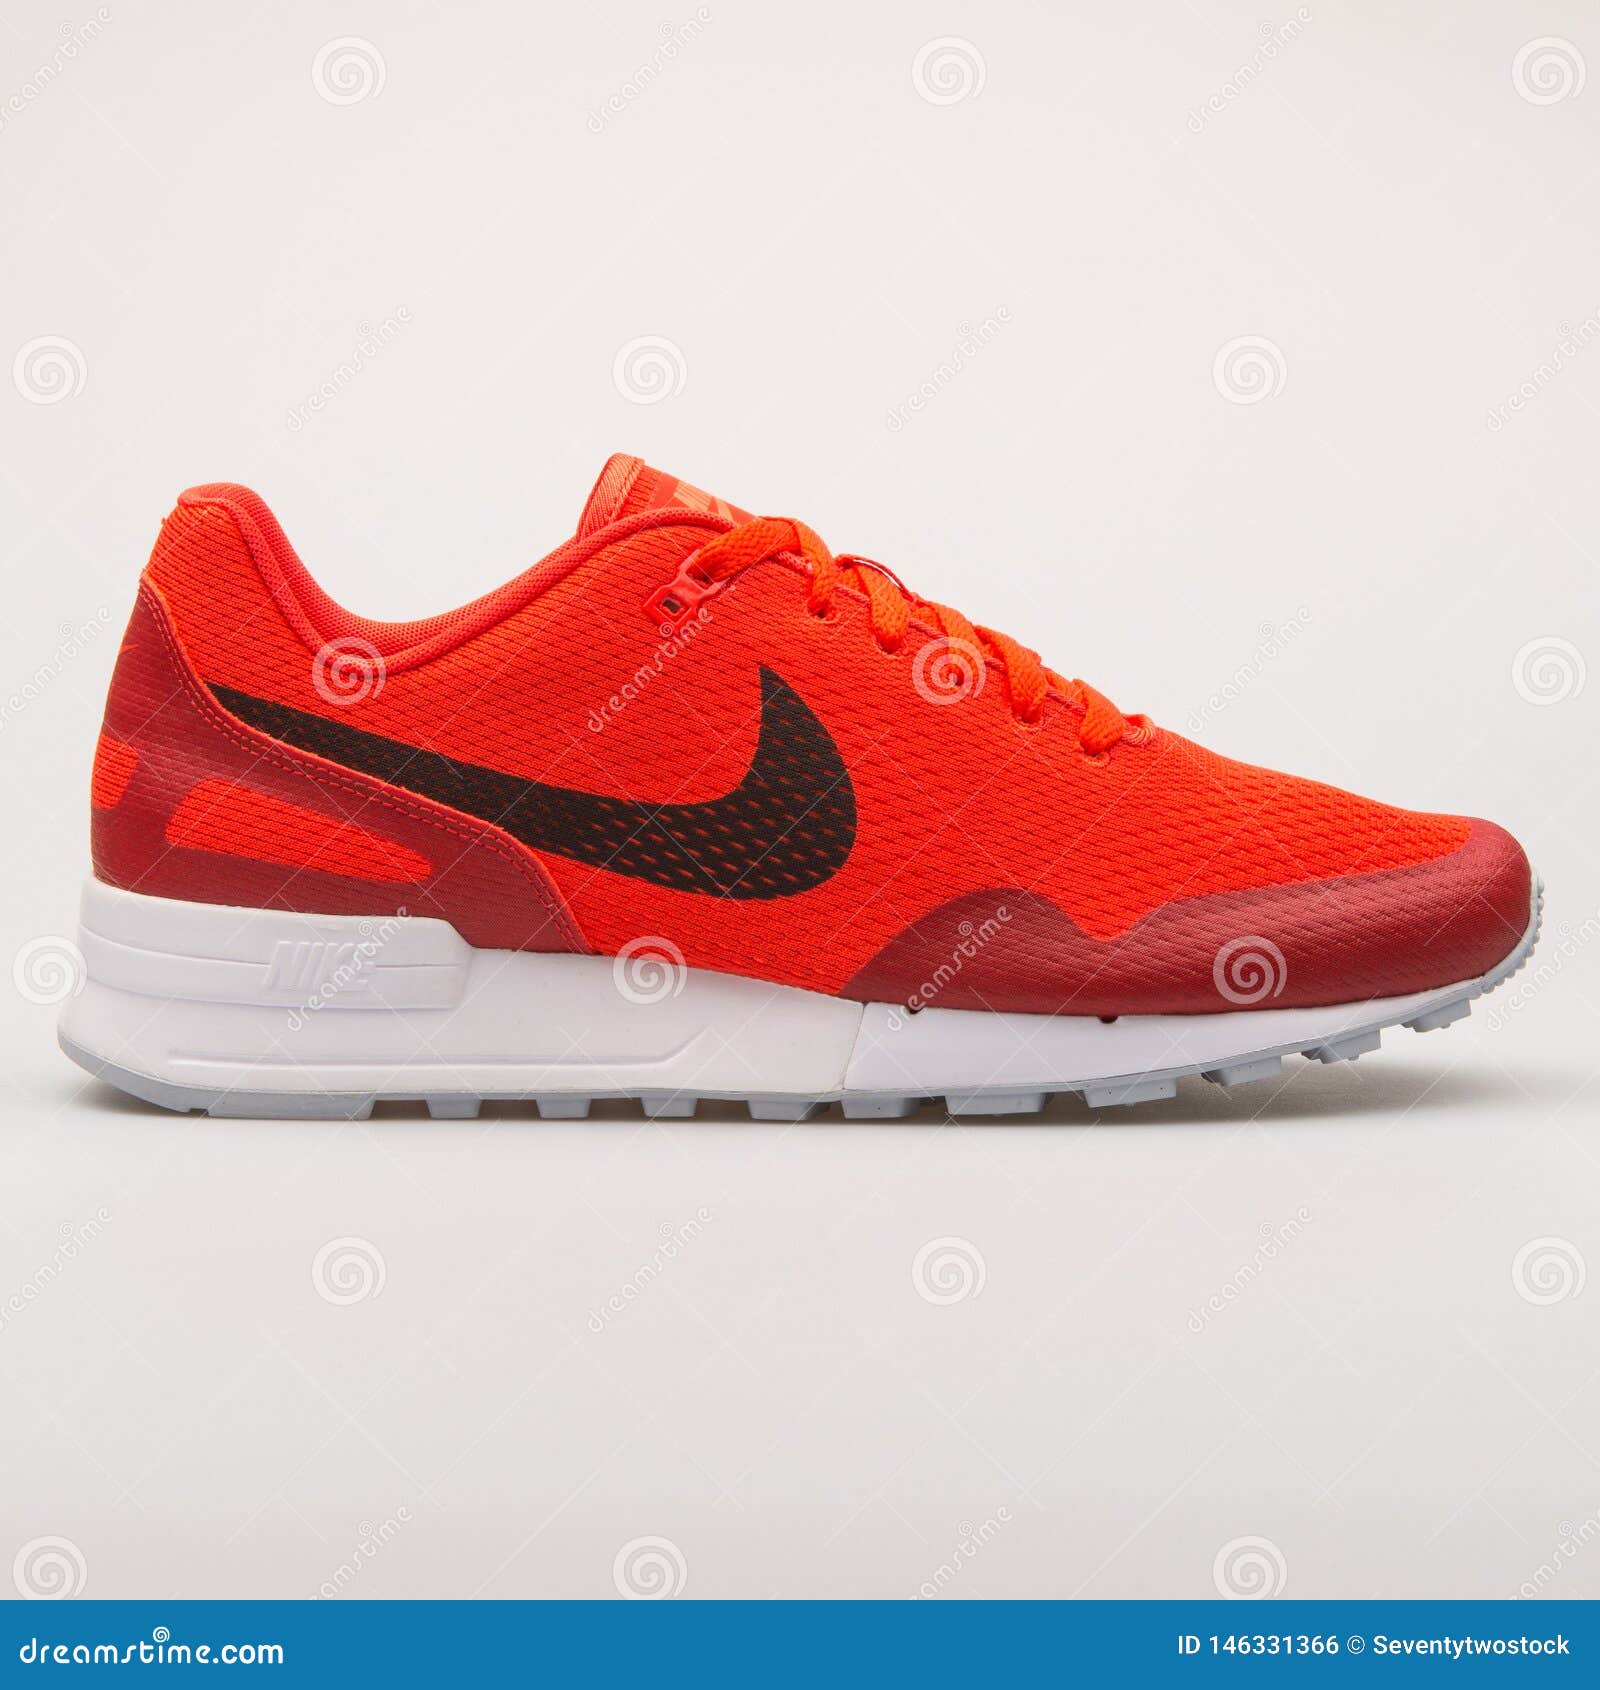 Nike Air Pegasus 89 EGD Red Sneaker Editorial Photo - Image of equipment,  casual: 146331366